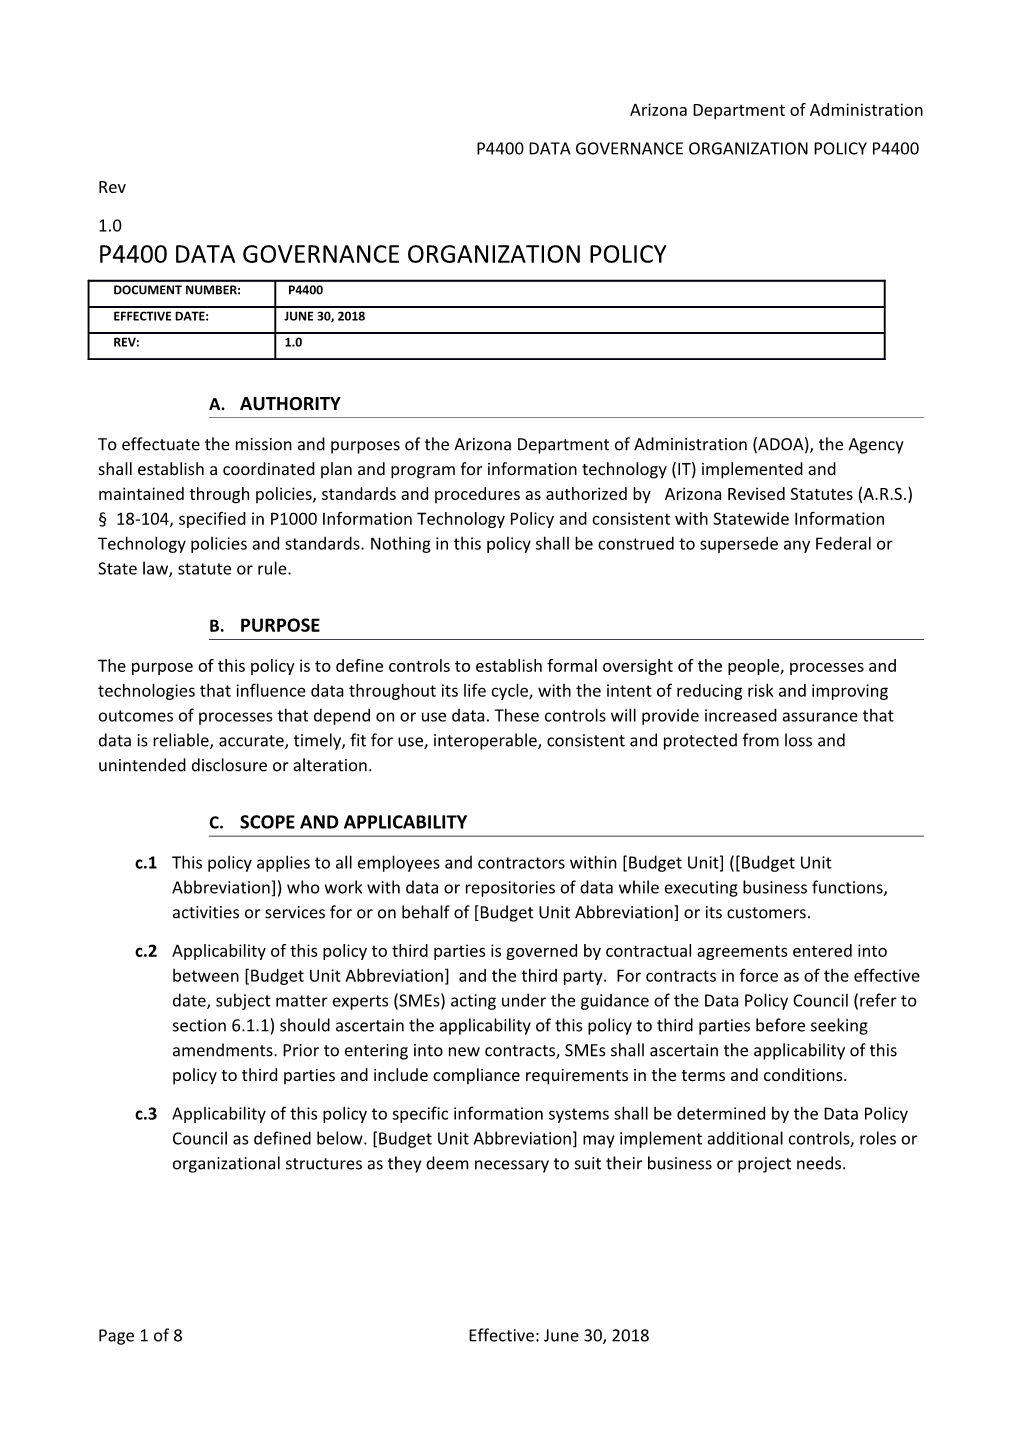 P7400 Data Governance Organization Policy